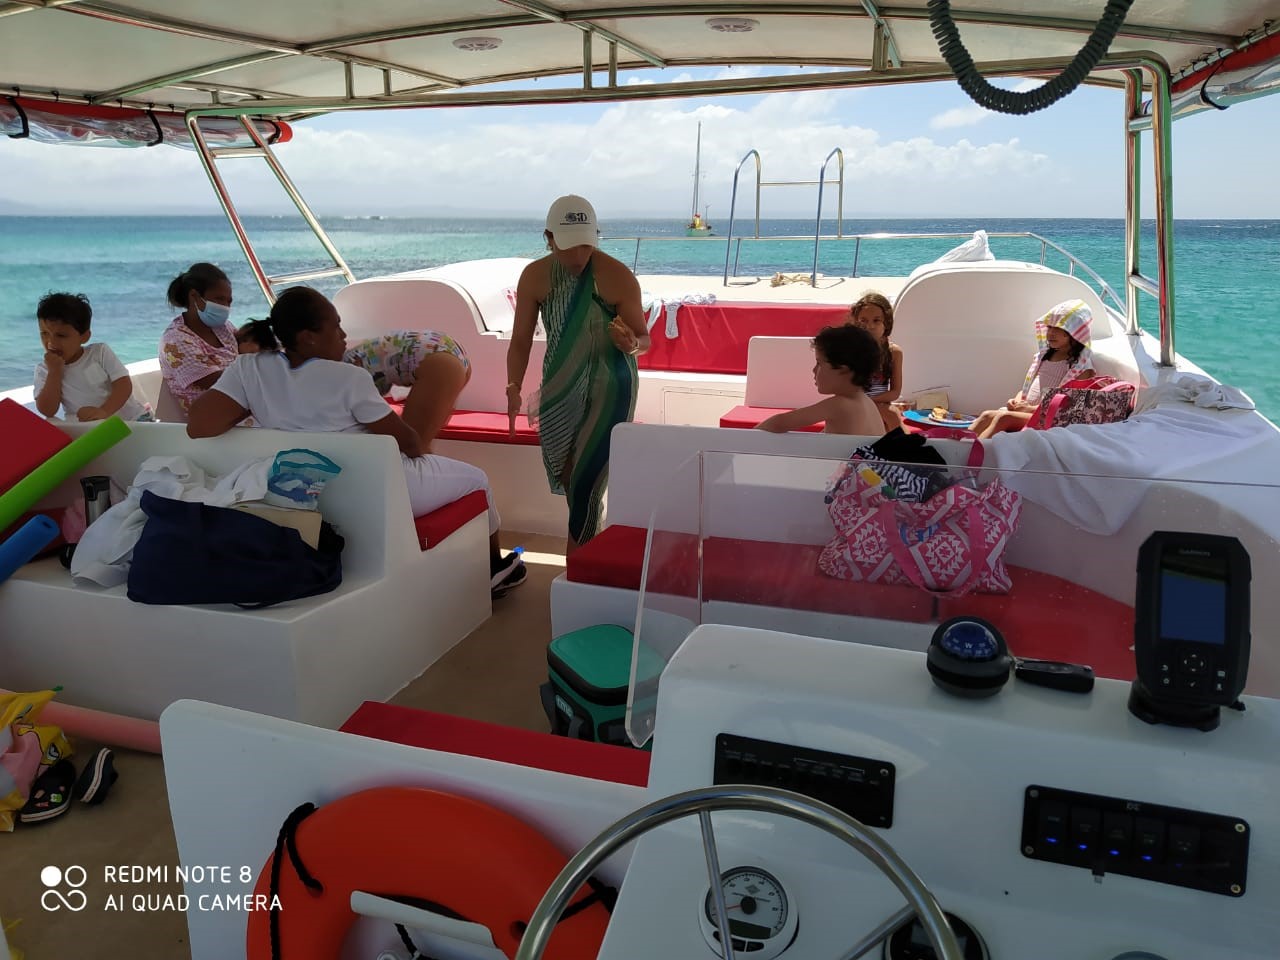 Private Catamaran Tours in Samana to Cayo Levantado or Haitises Park